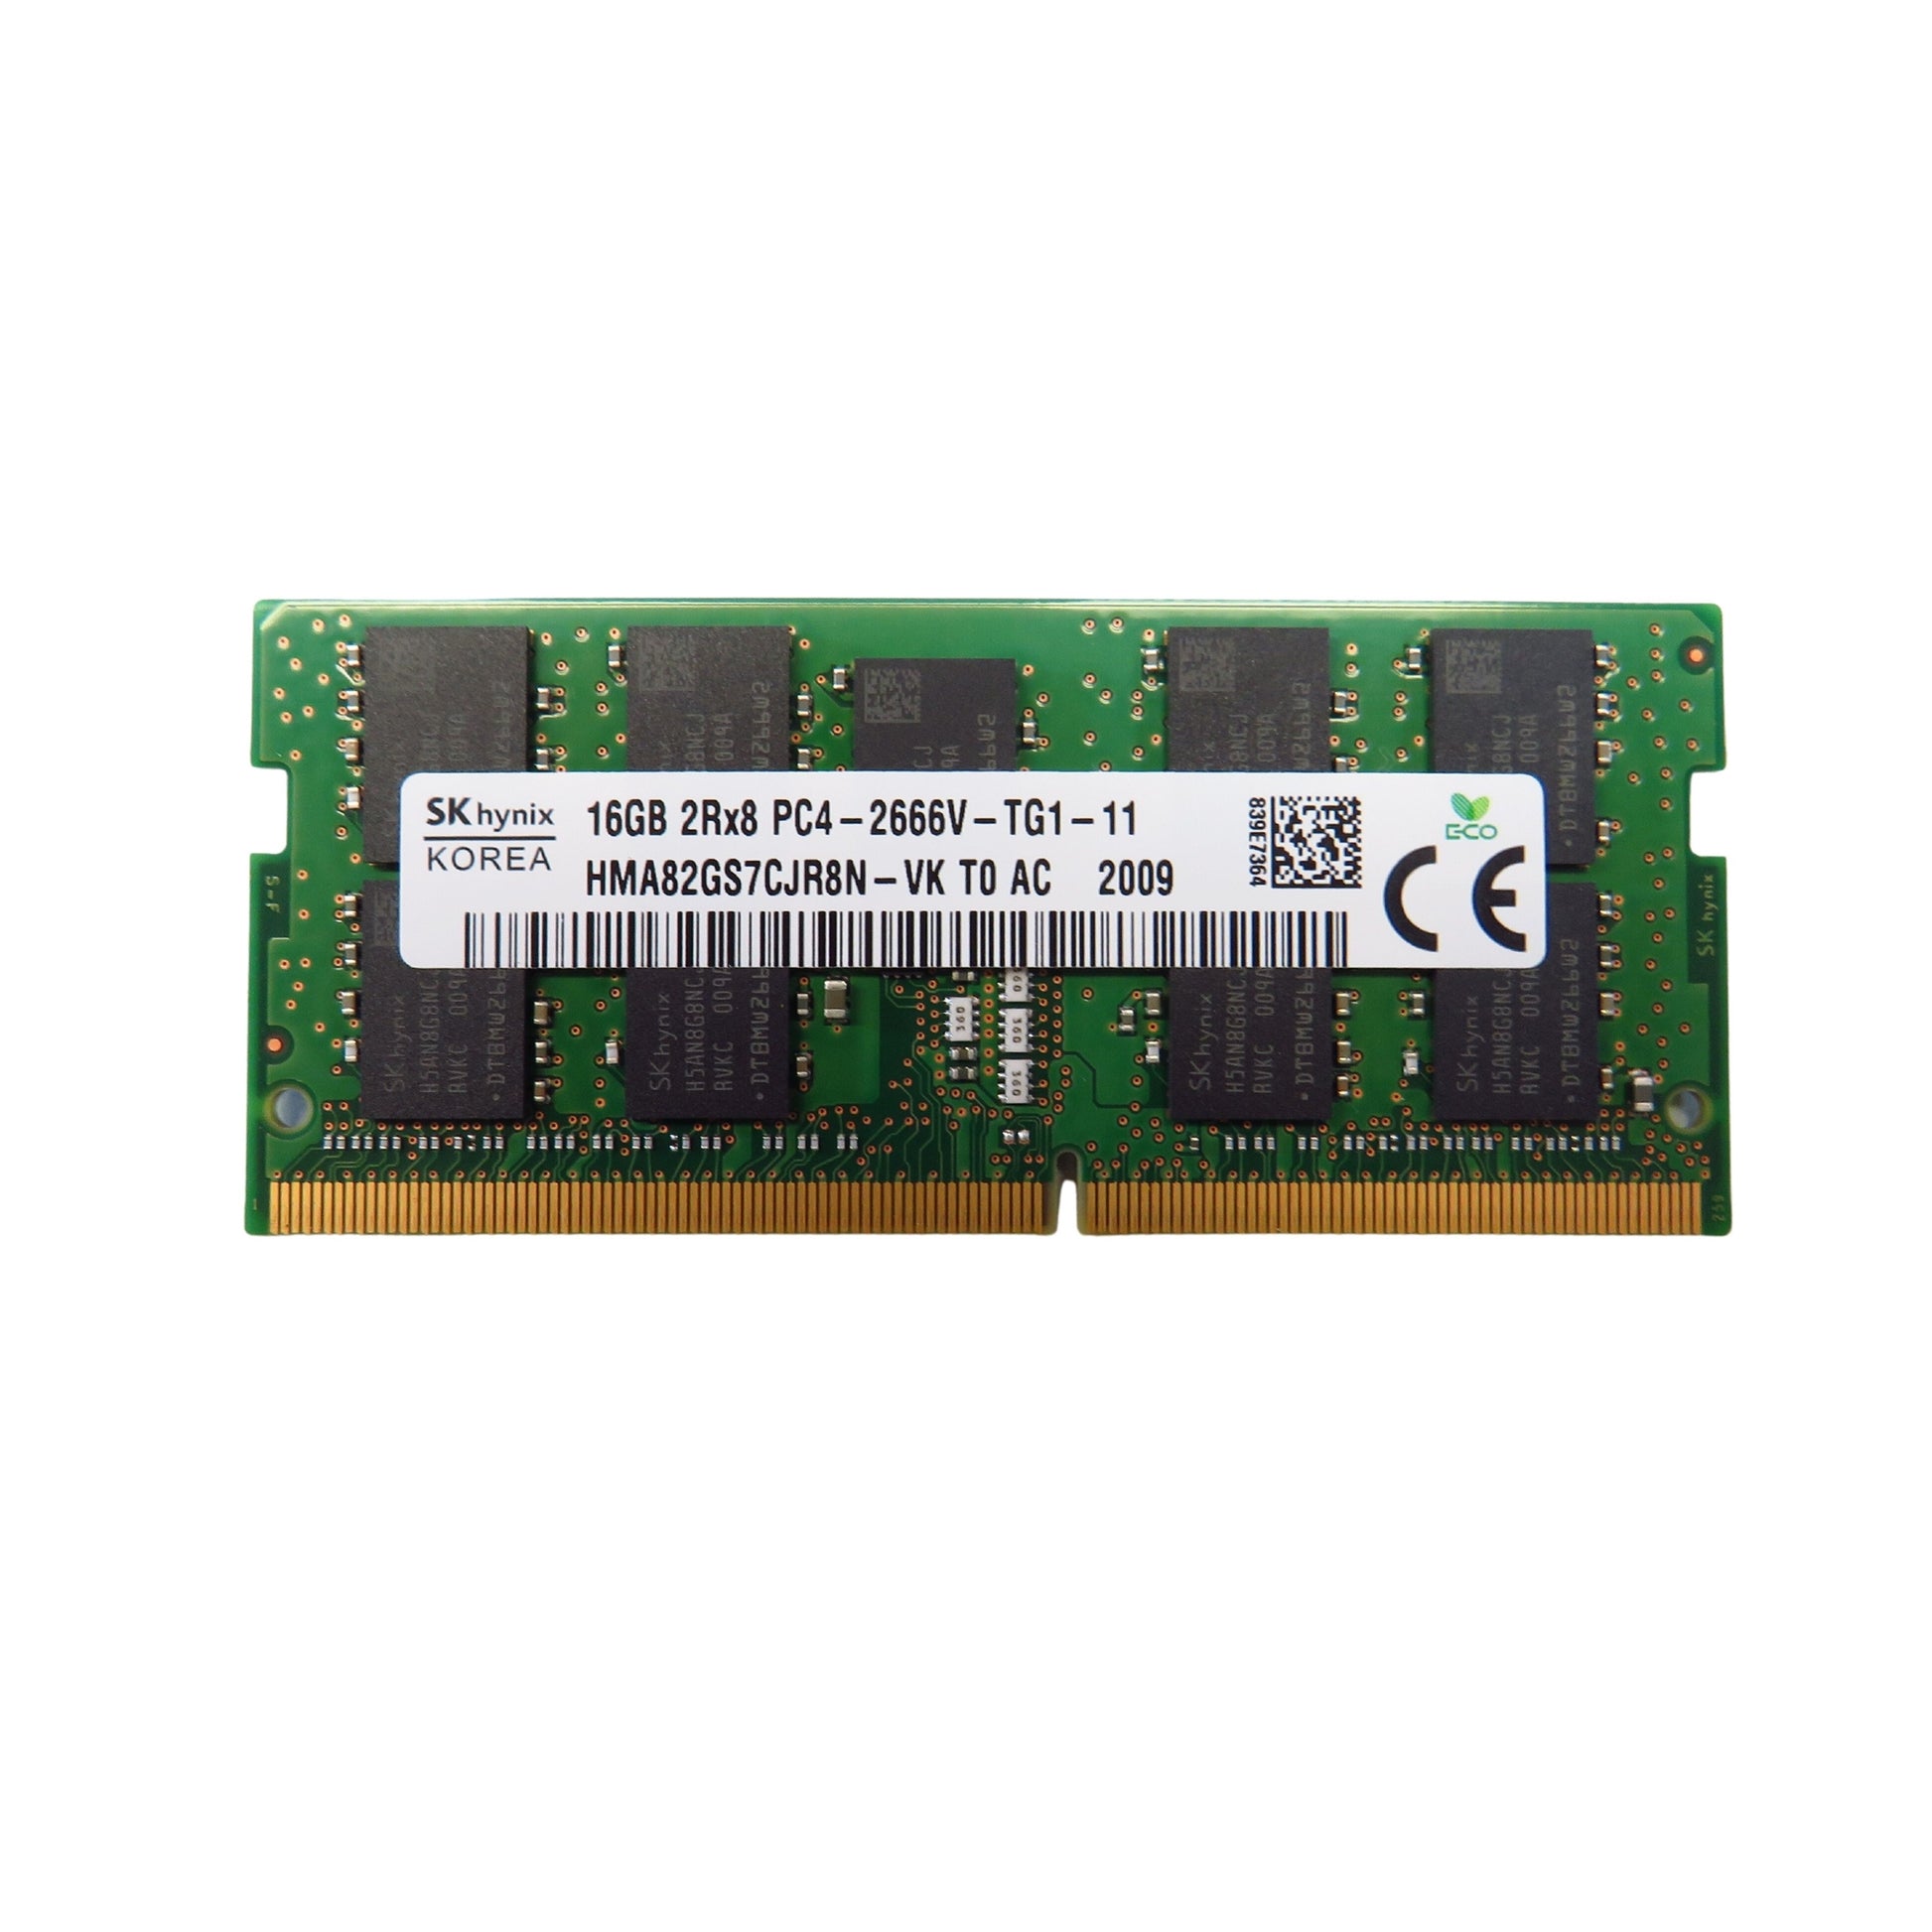 16GB PC4 (DDR4) 2666 MHz 2666V-U 2Rx8 Memory - Generic